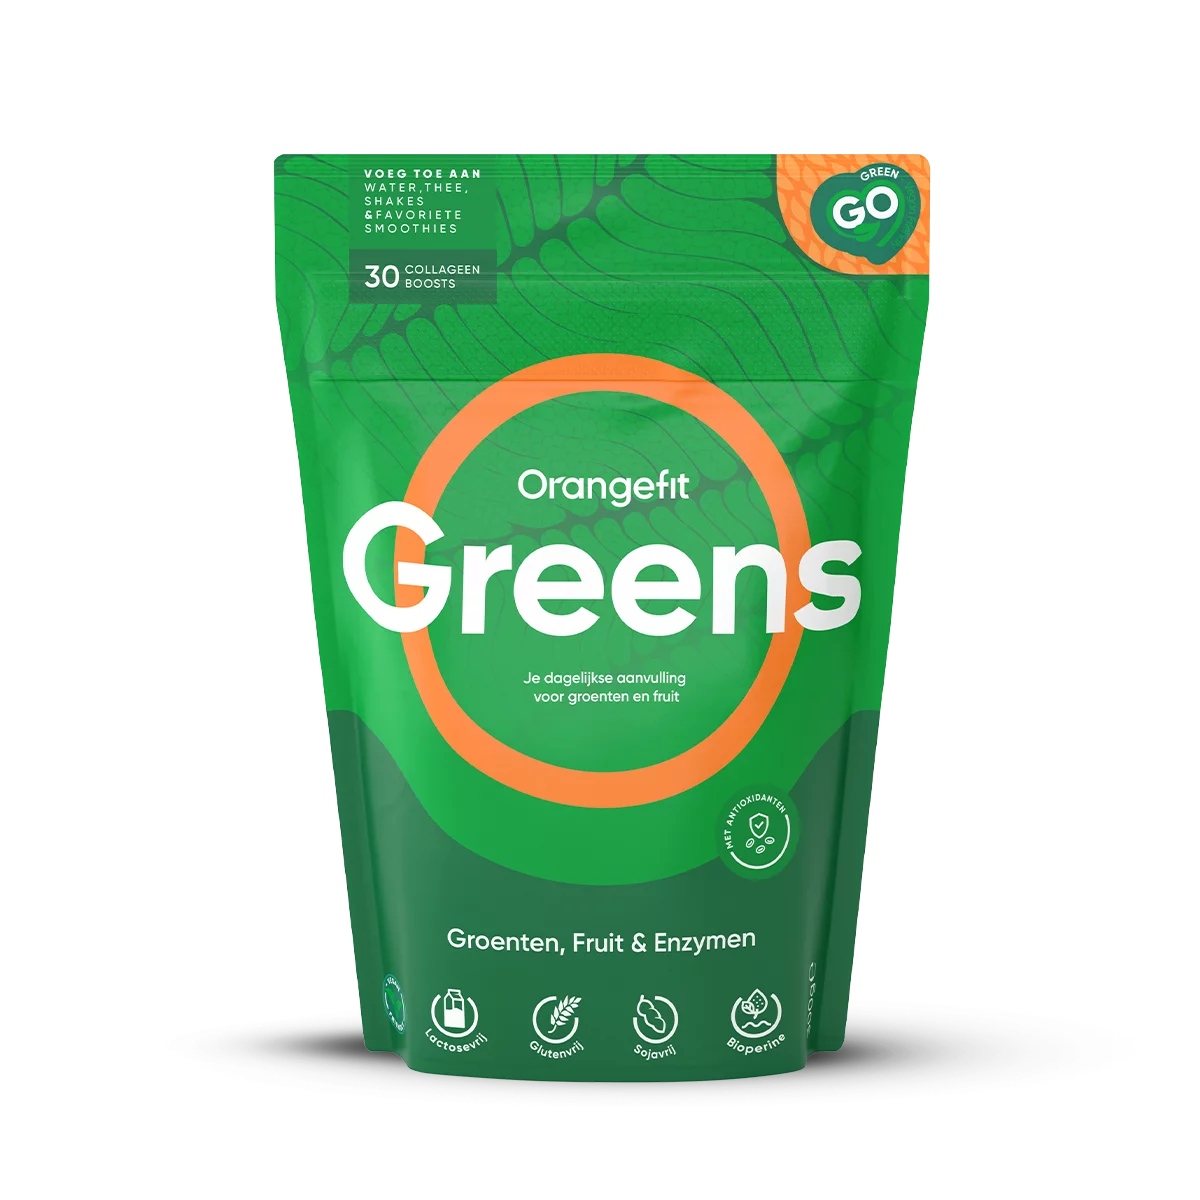 Orangefit Greens, 300g